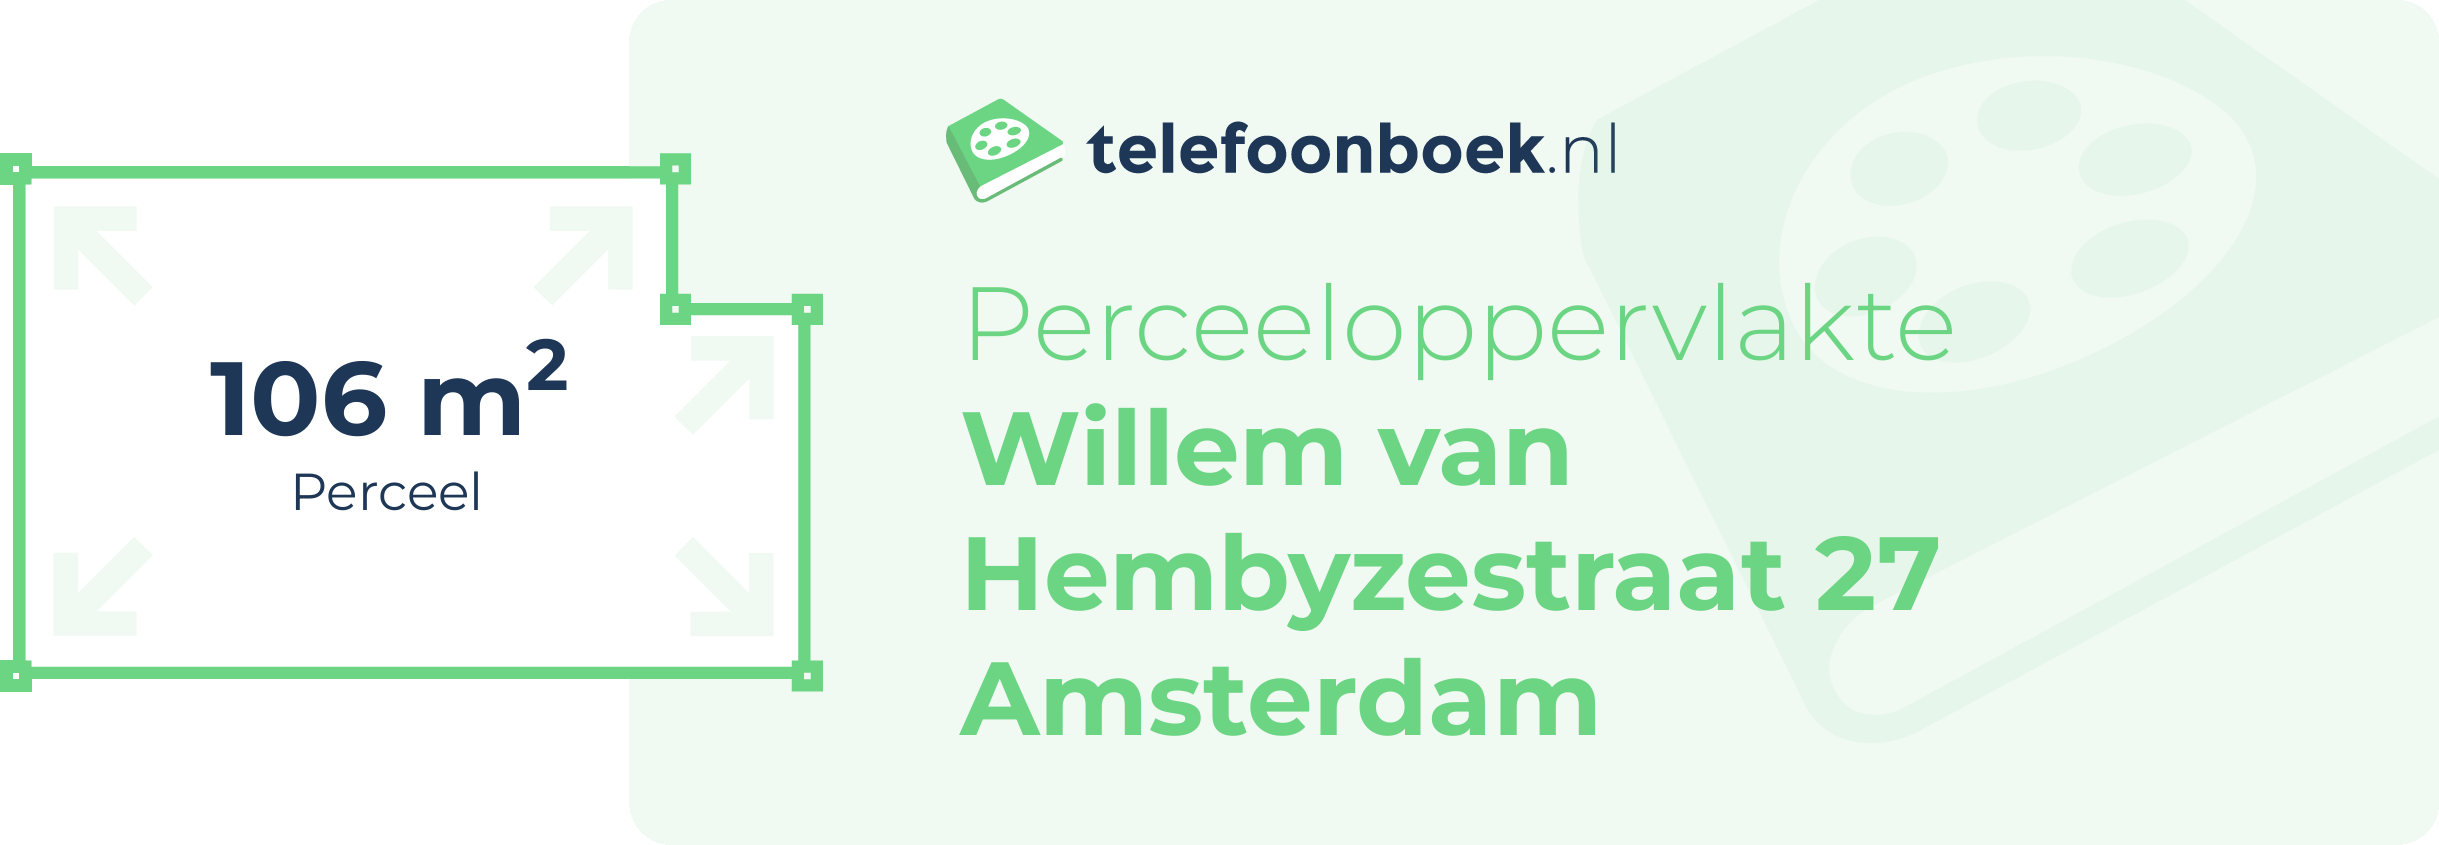 Perceeloppervlakte Willem Van Hembyzestraat 27 Amsterdam